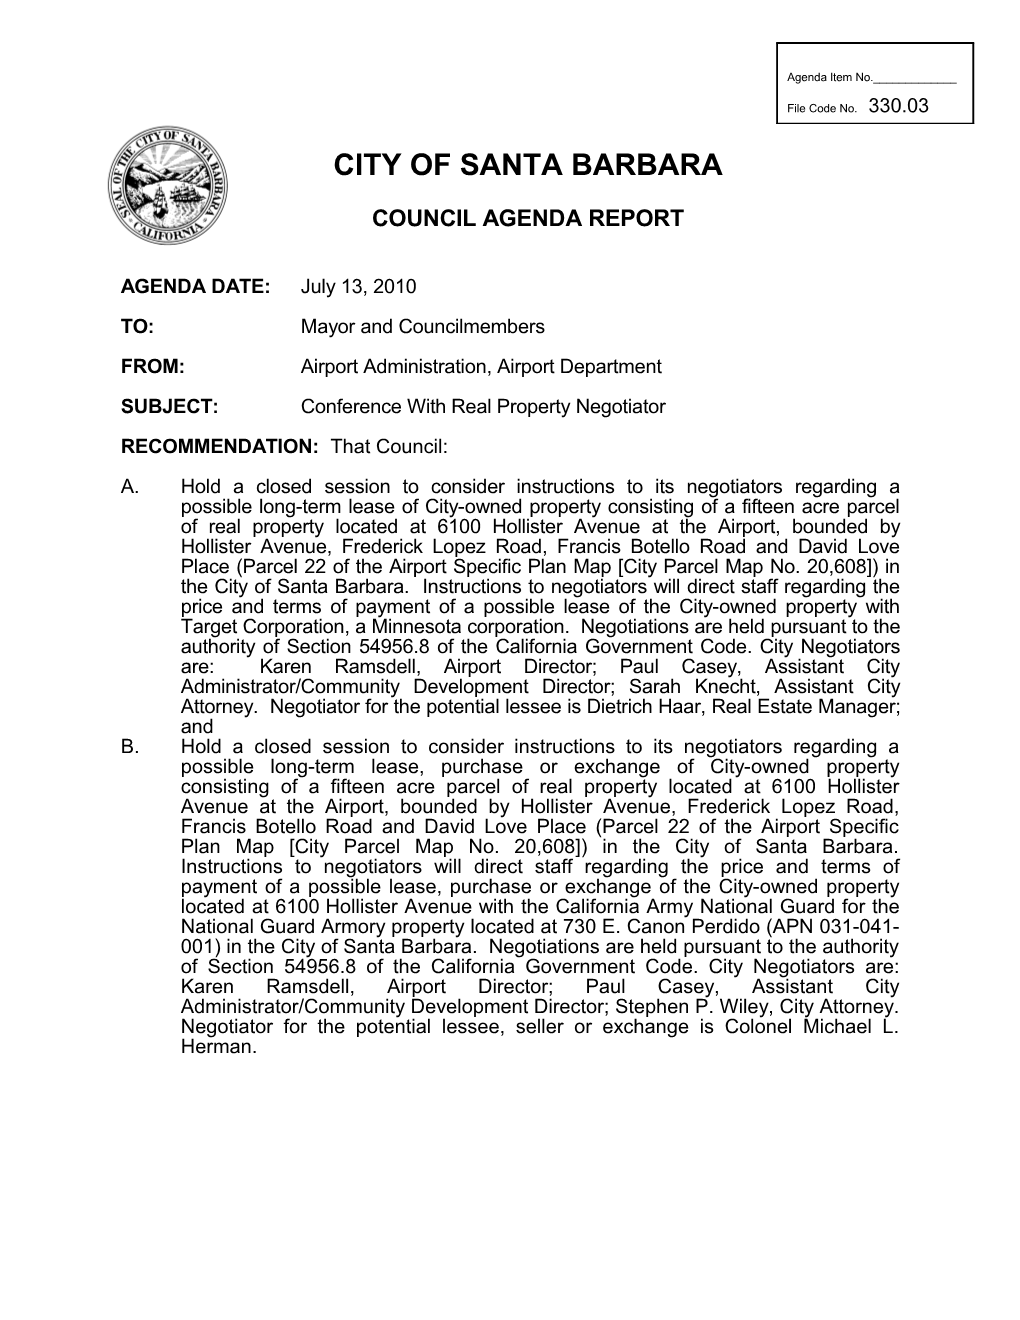 City of Santa Barbara s12